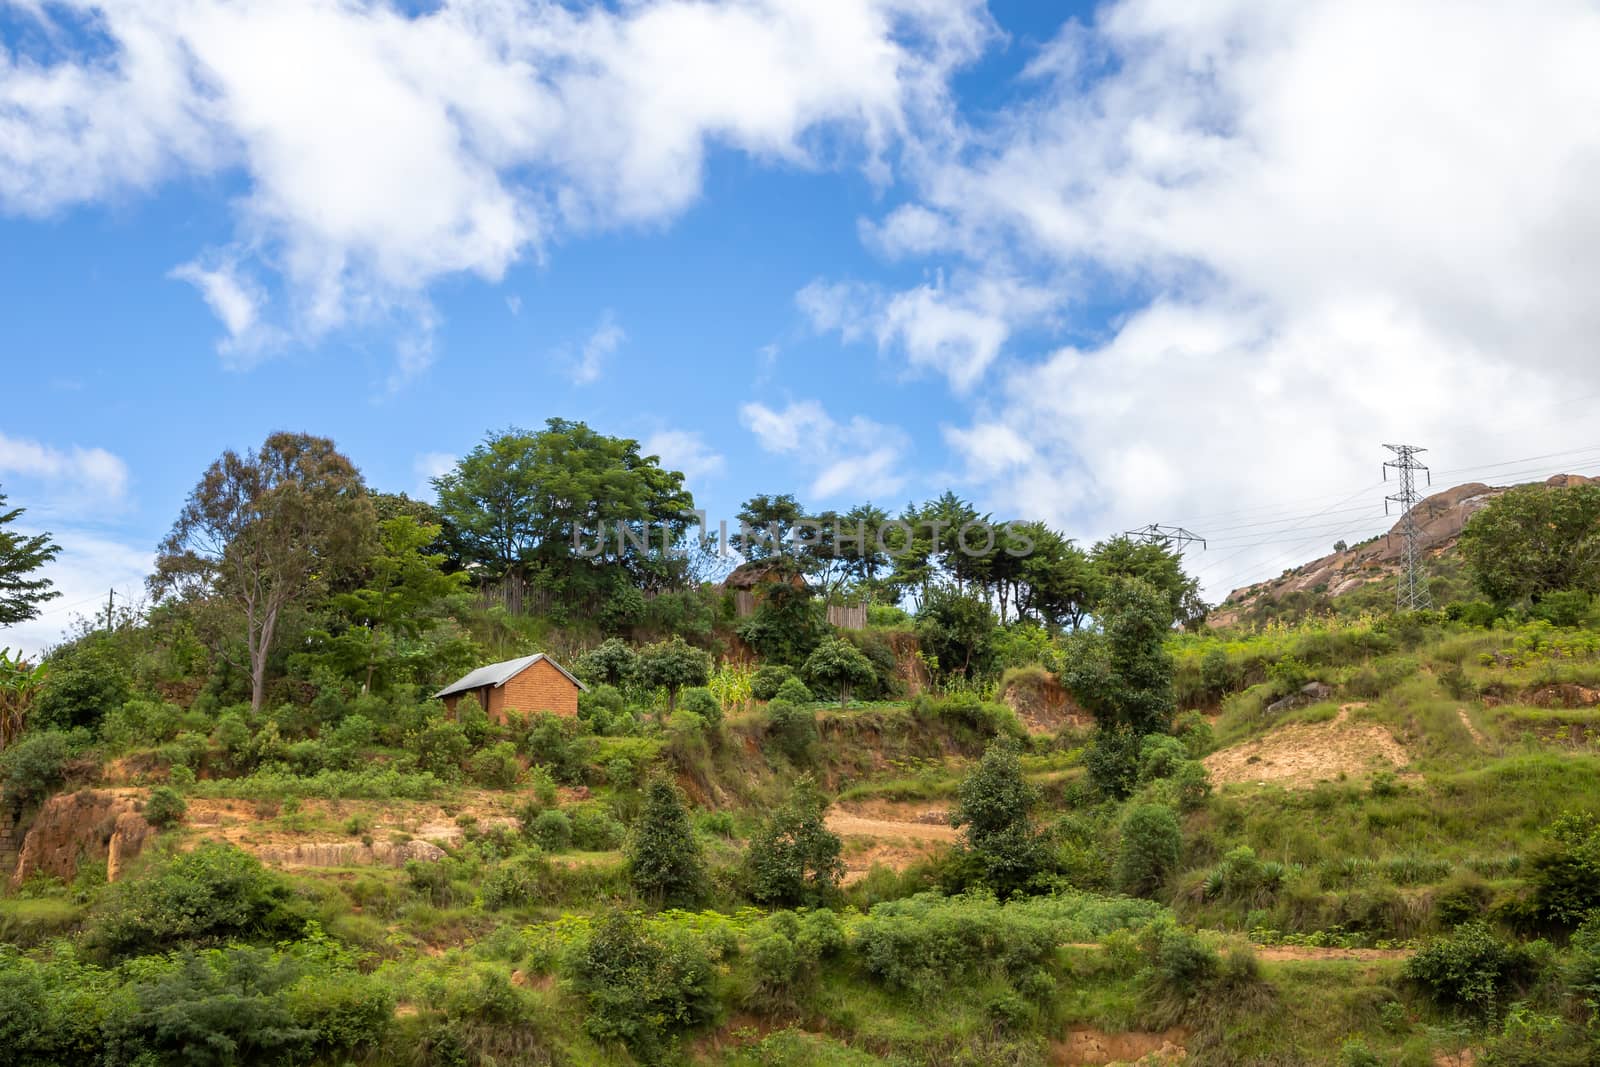 A Landscape shots of the island of Madagascar